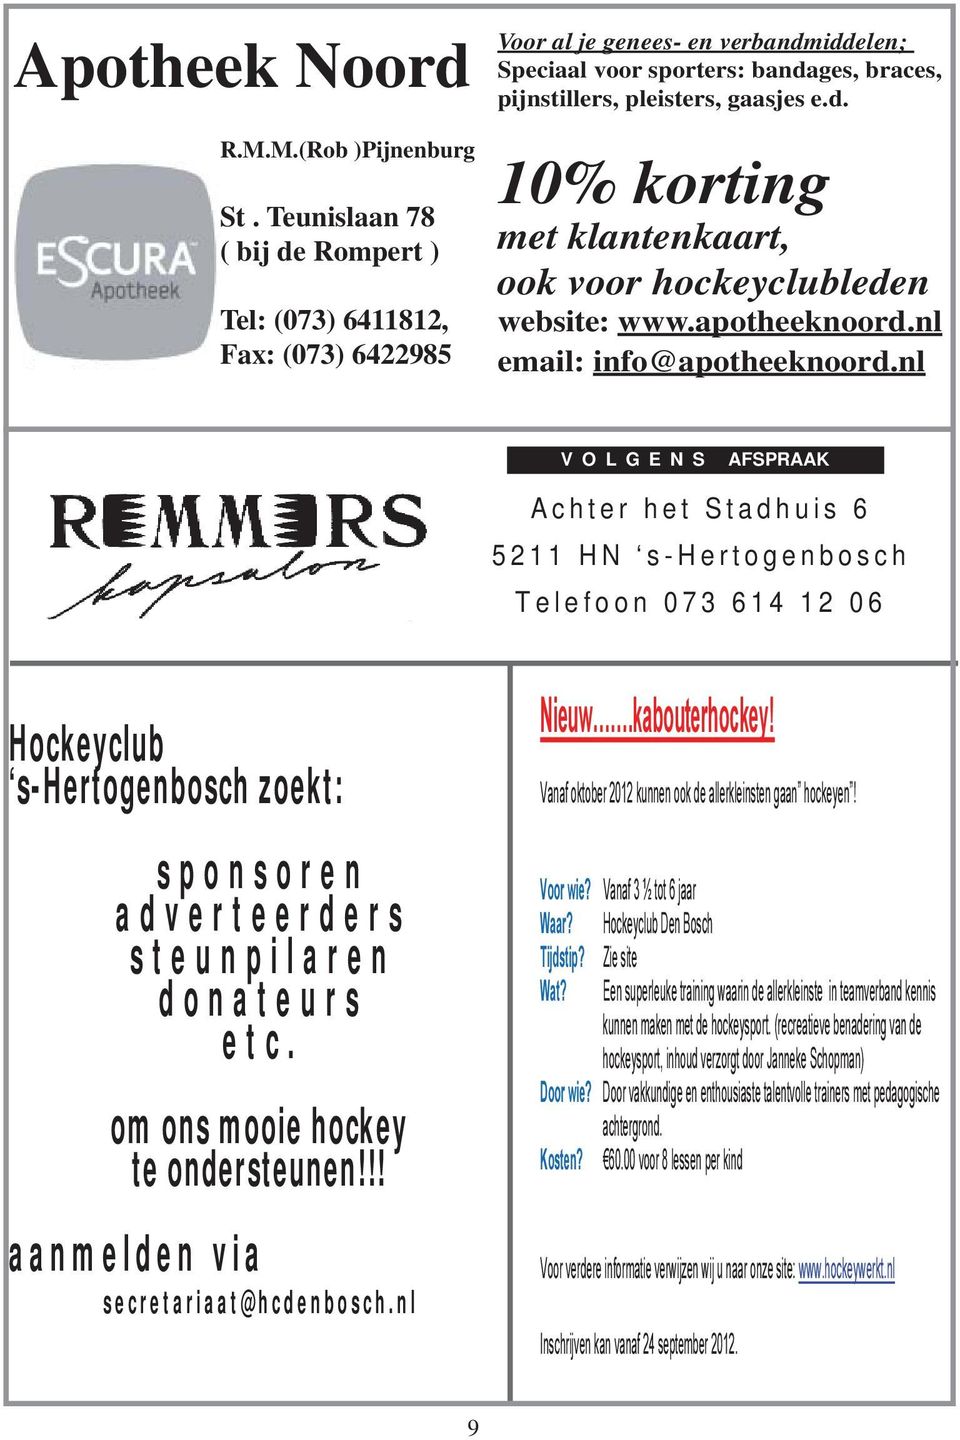 apotheeknoord.nl email: info@apotheeknoord.